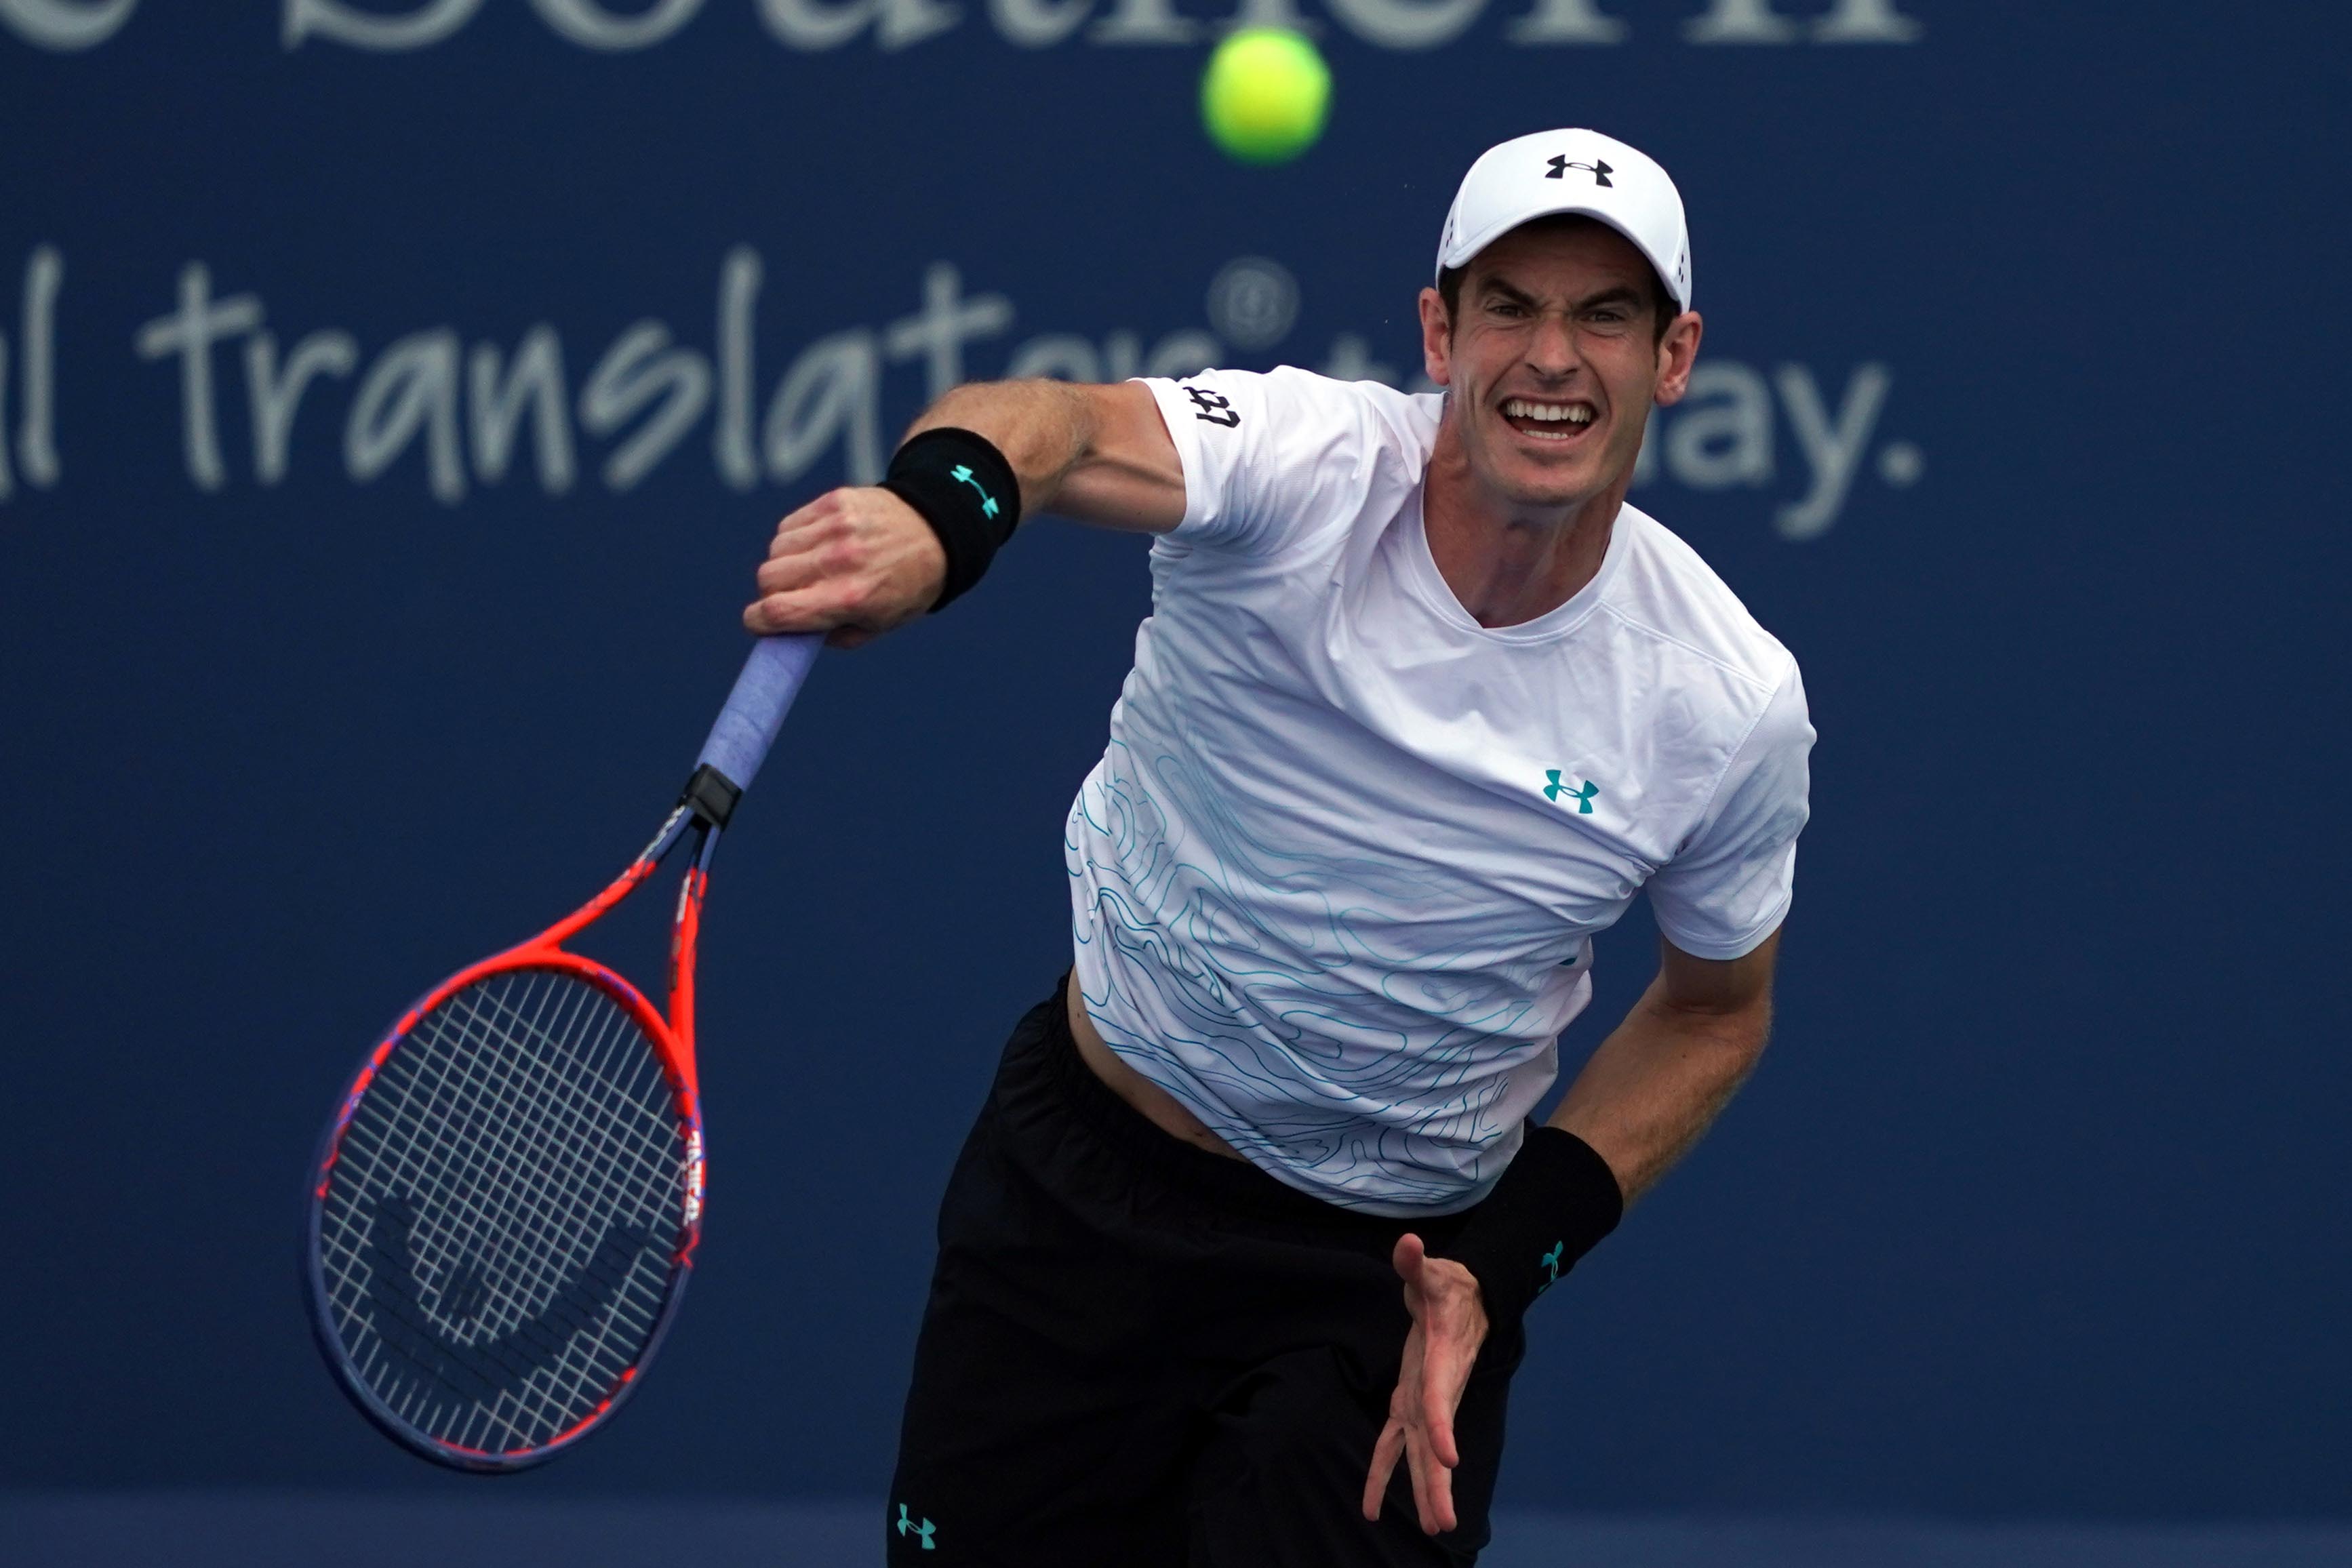 Tennis: Pouille outlasts Murray in Cincinnati opener